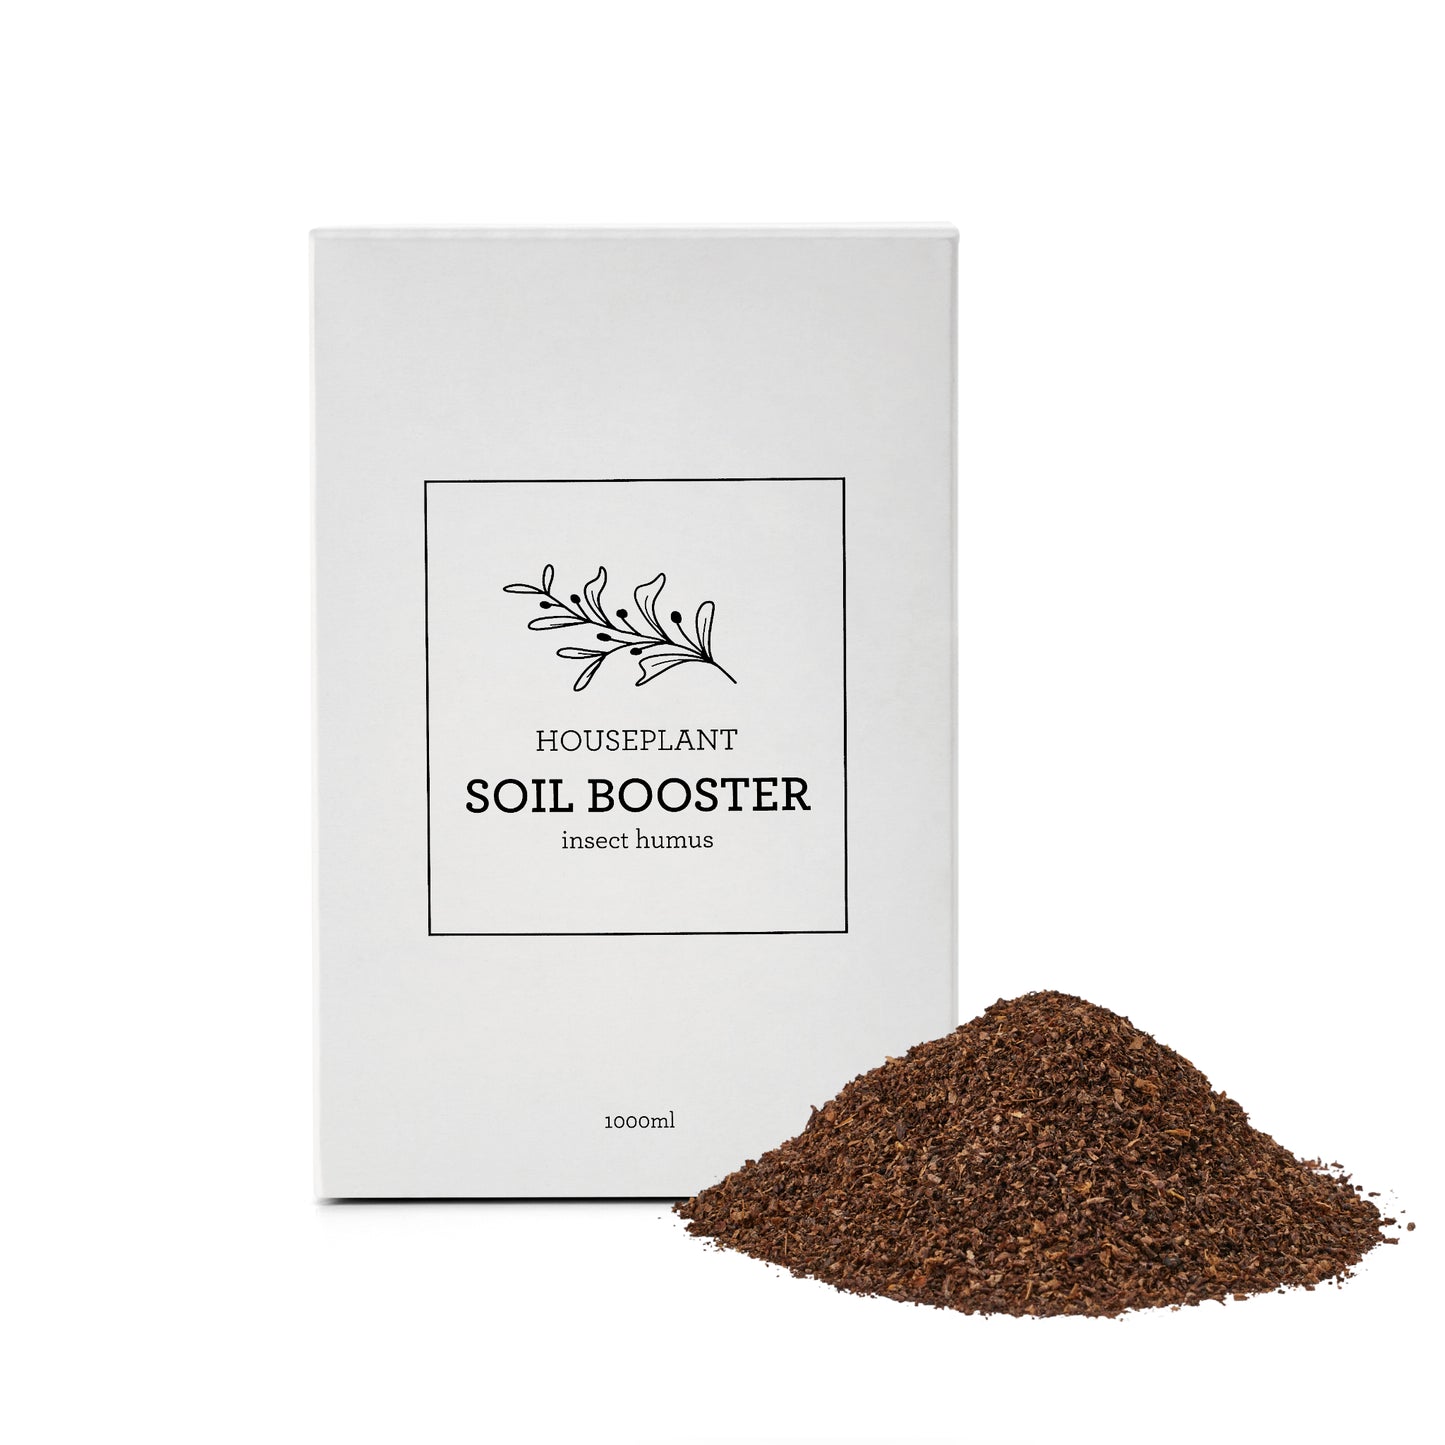 HOUSE PLANT SOIL BOOSTER | Humus de insectos (Caja de 6 unidades) 